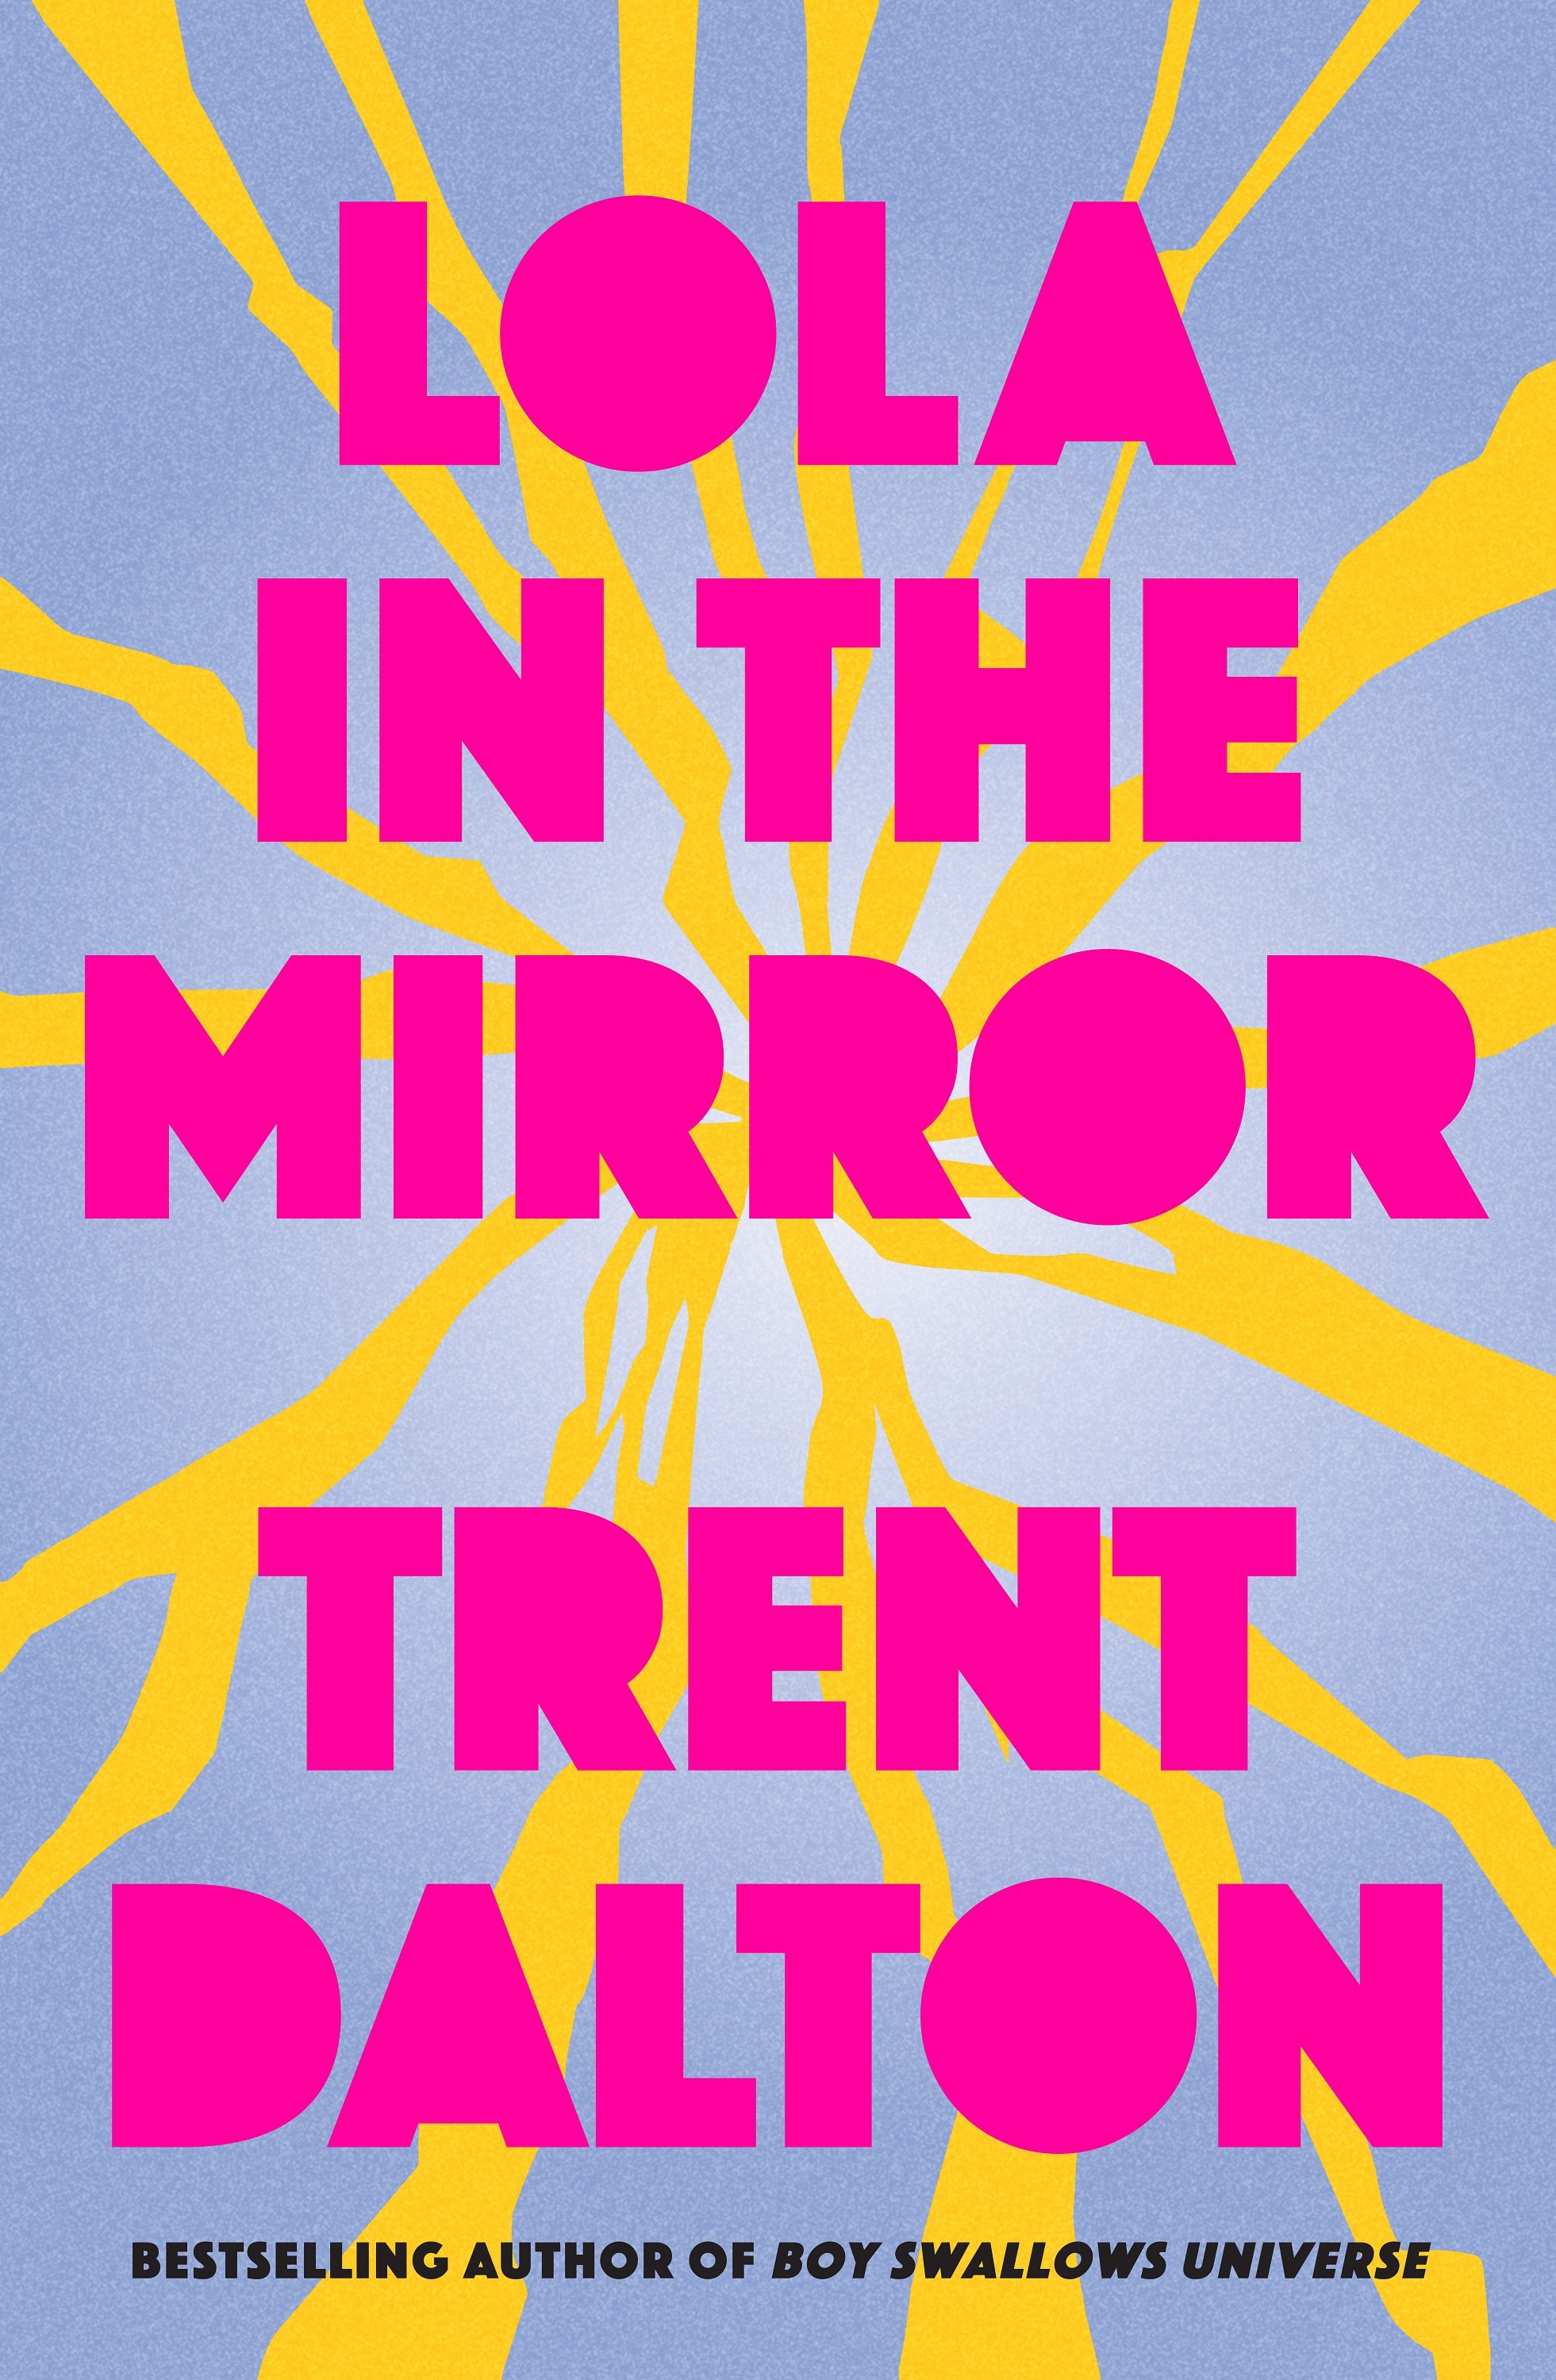 Hot Mirror [Book]